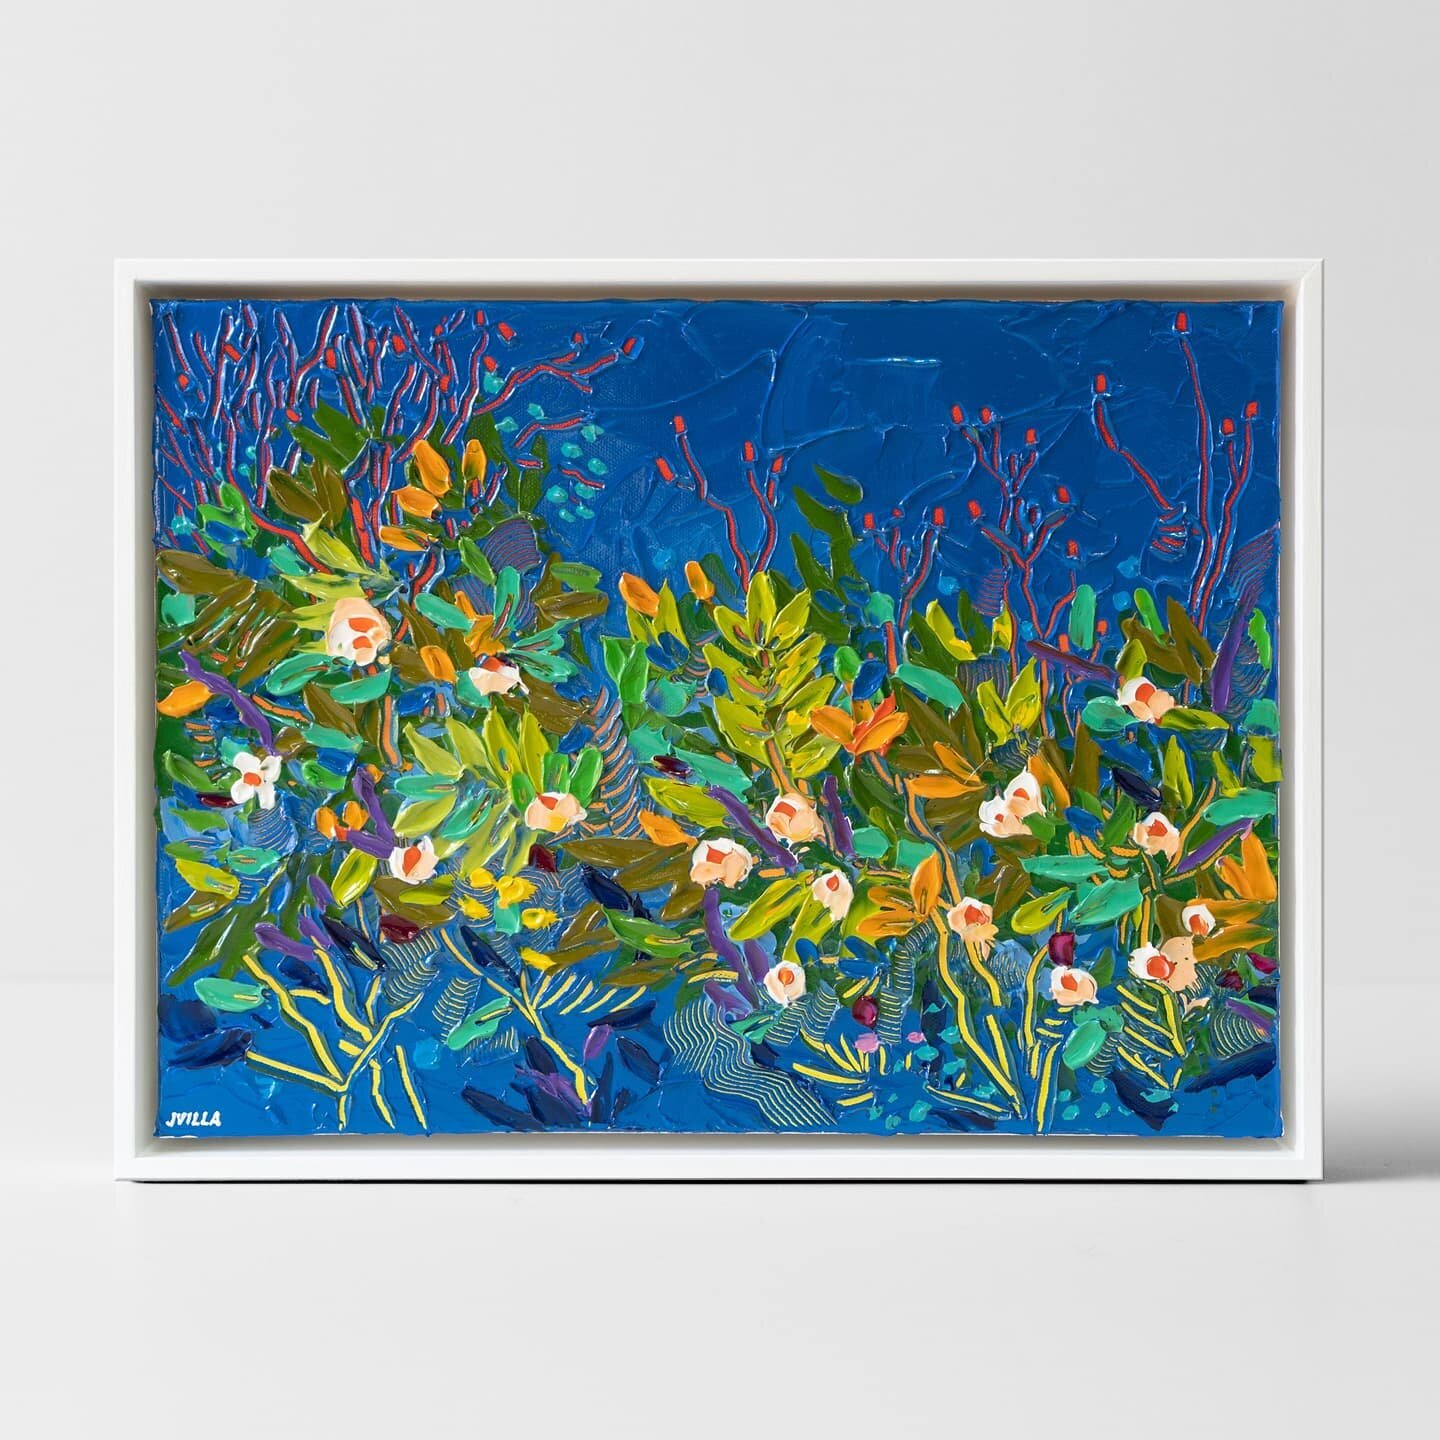 New ✨🌌
Midnight Garden 2 
Acrylic on canvas
41x31cm